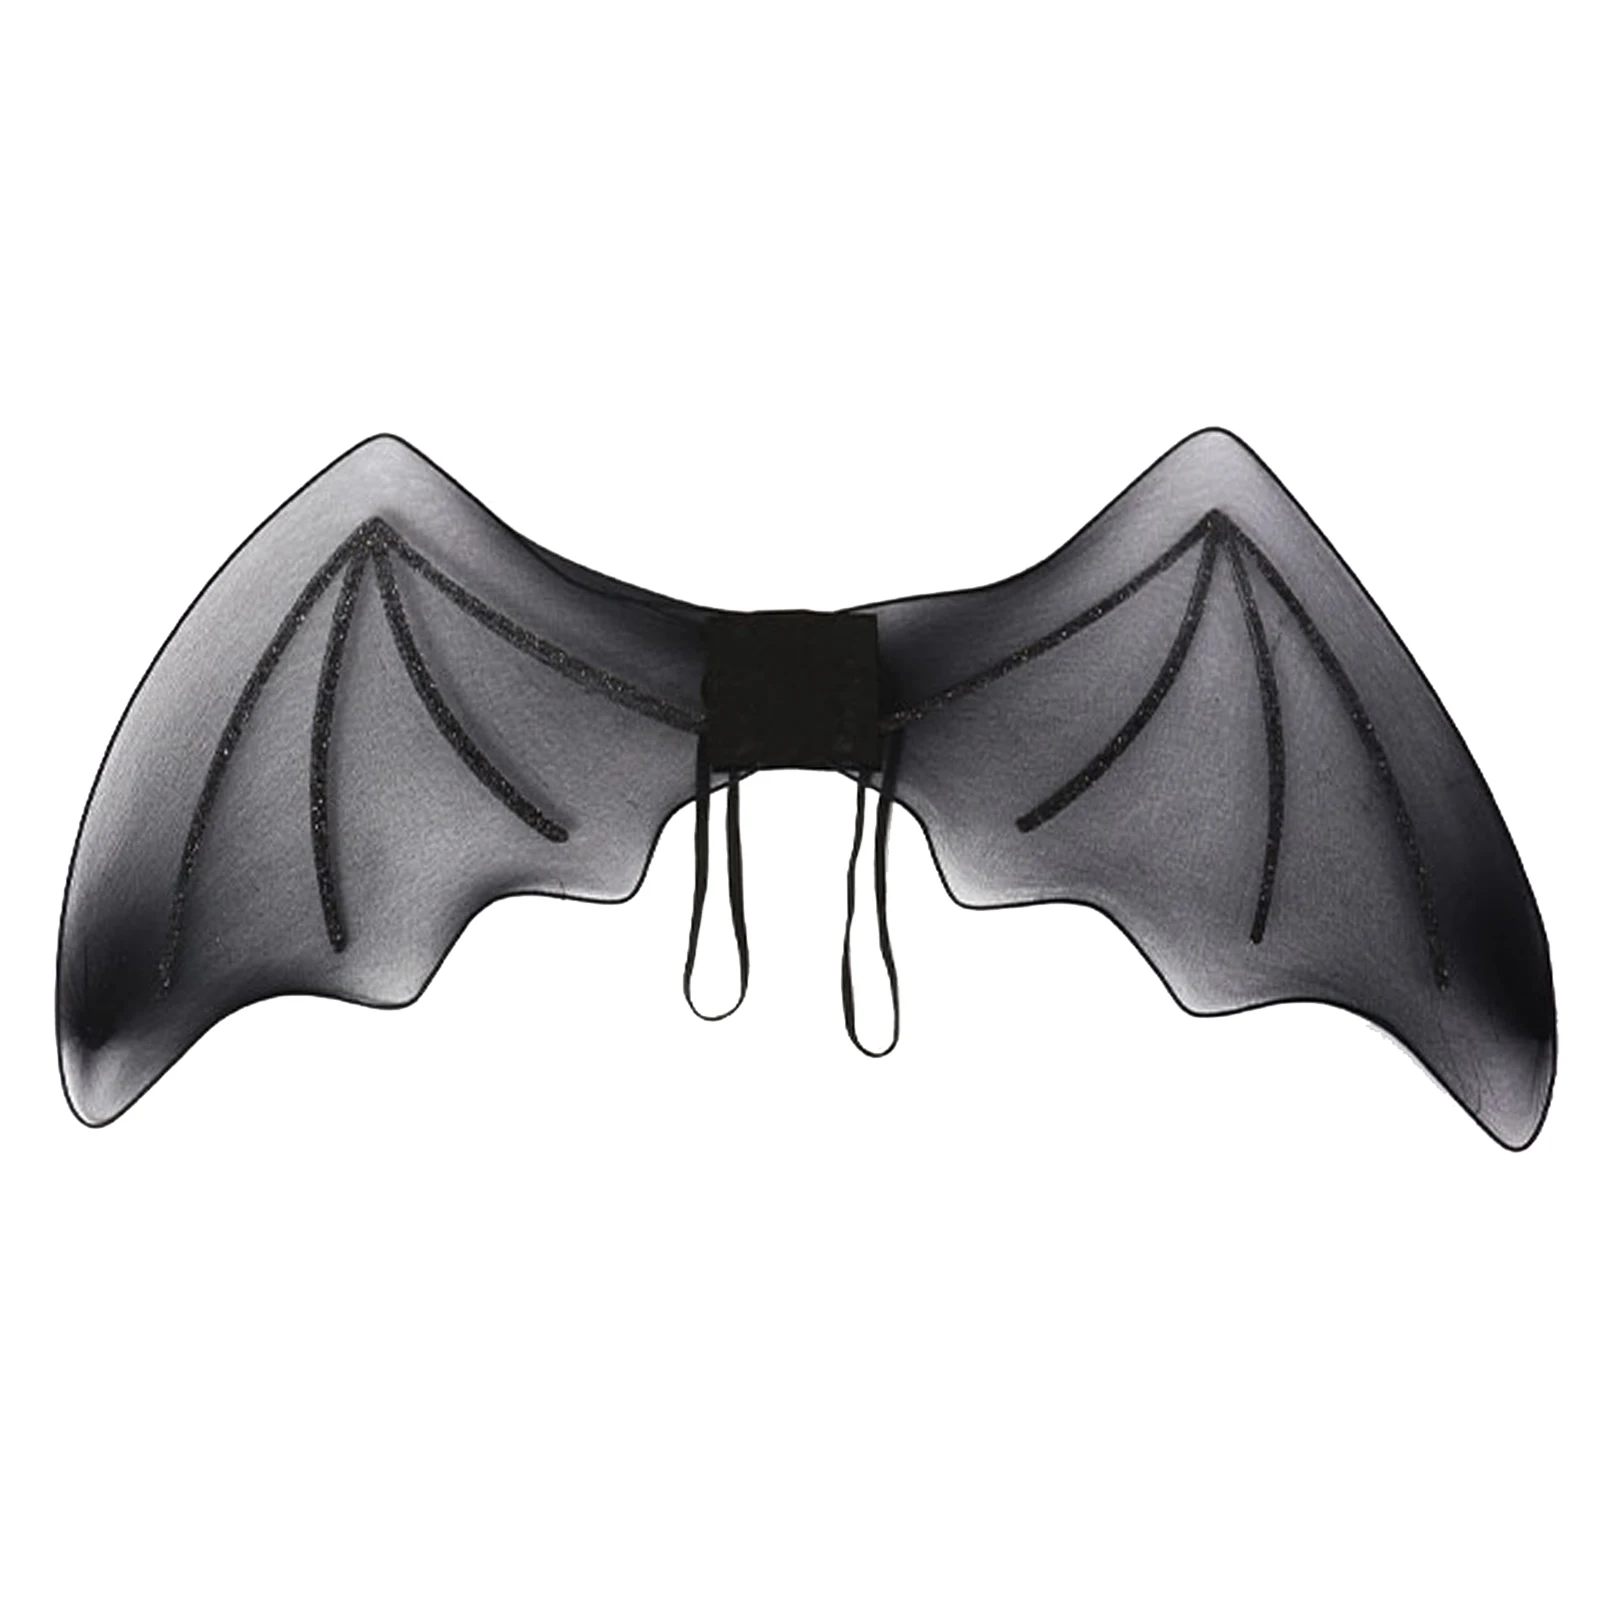 

Cool Devil Wings Bat Black Vampire Bat Wings Halloween Cosplay Party Dress Up Performance Props Little Devil Wings